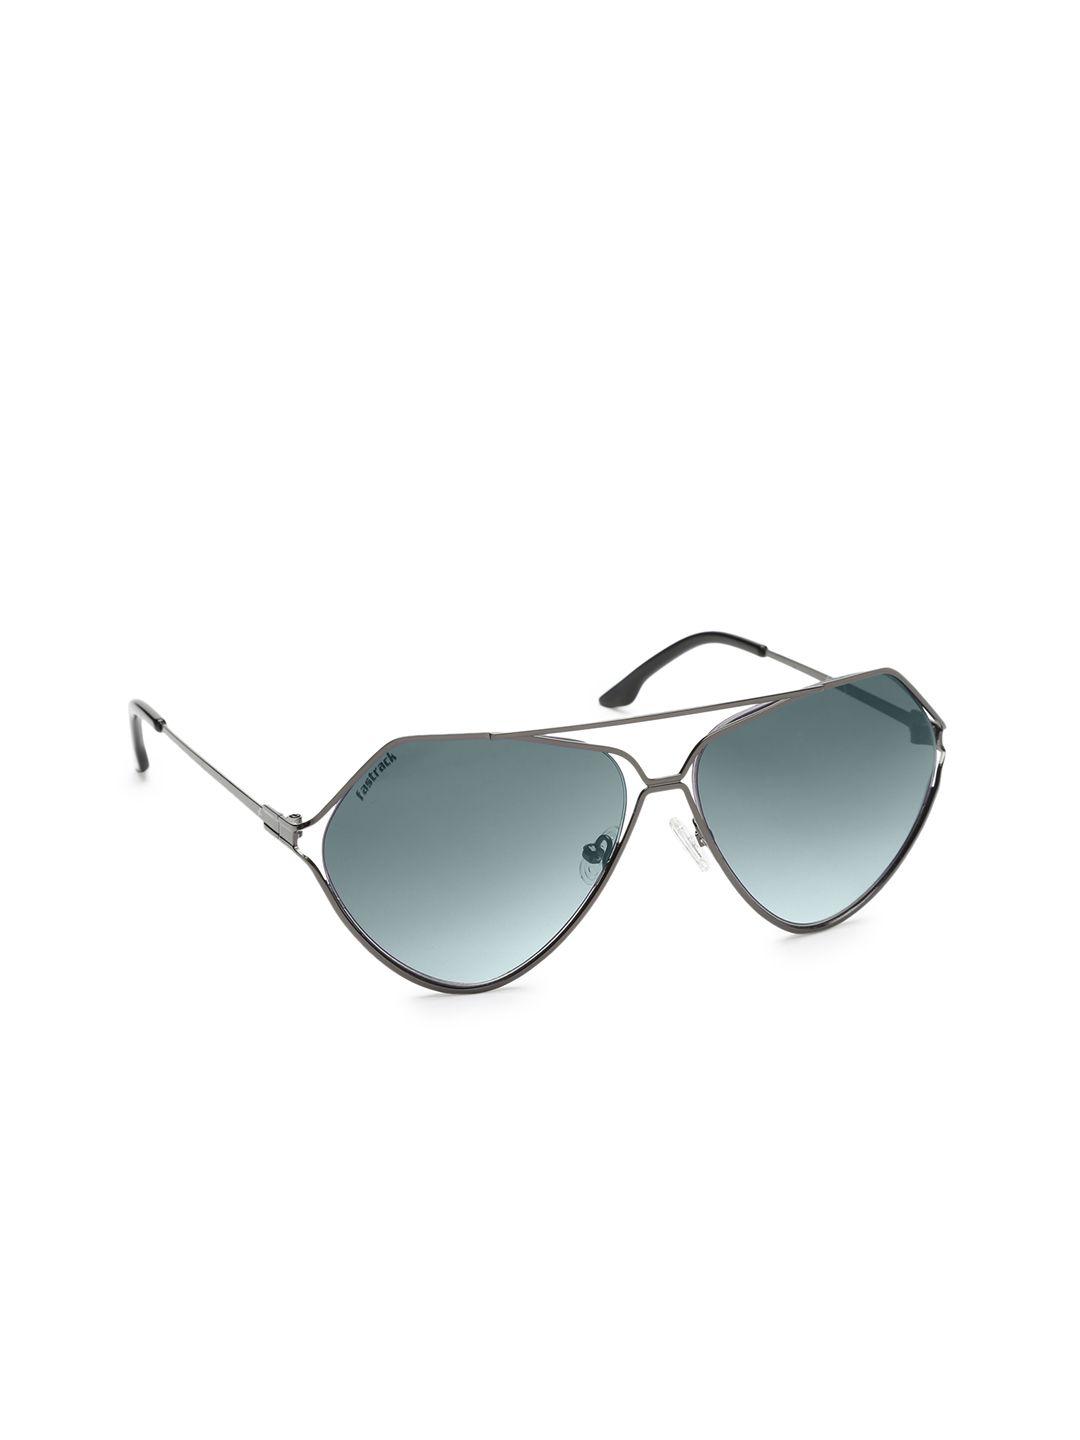 fastrack-women-oval-sunglasses-m178bk3f